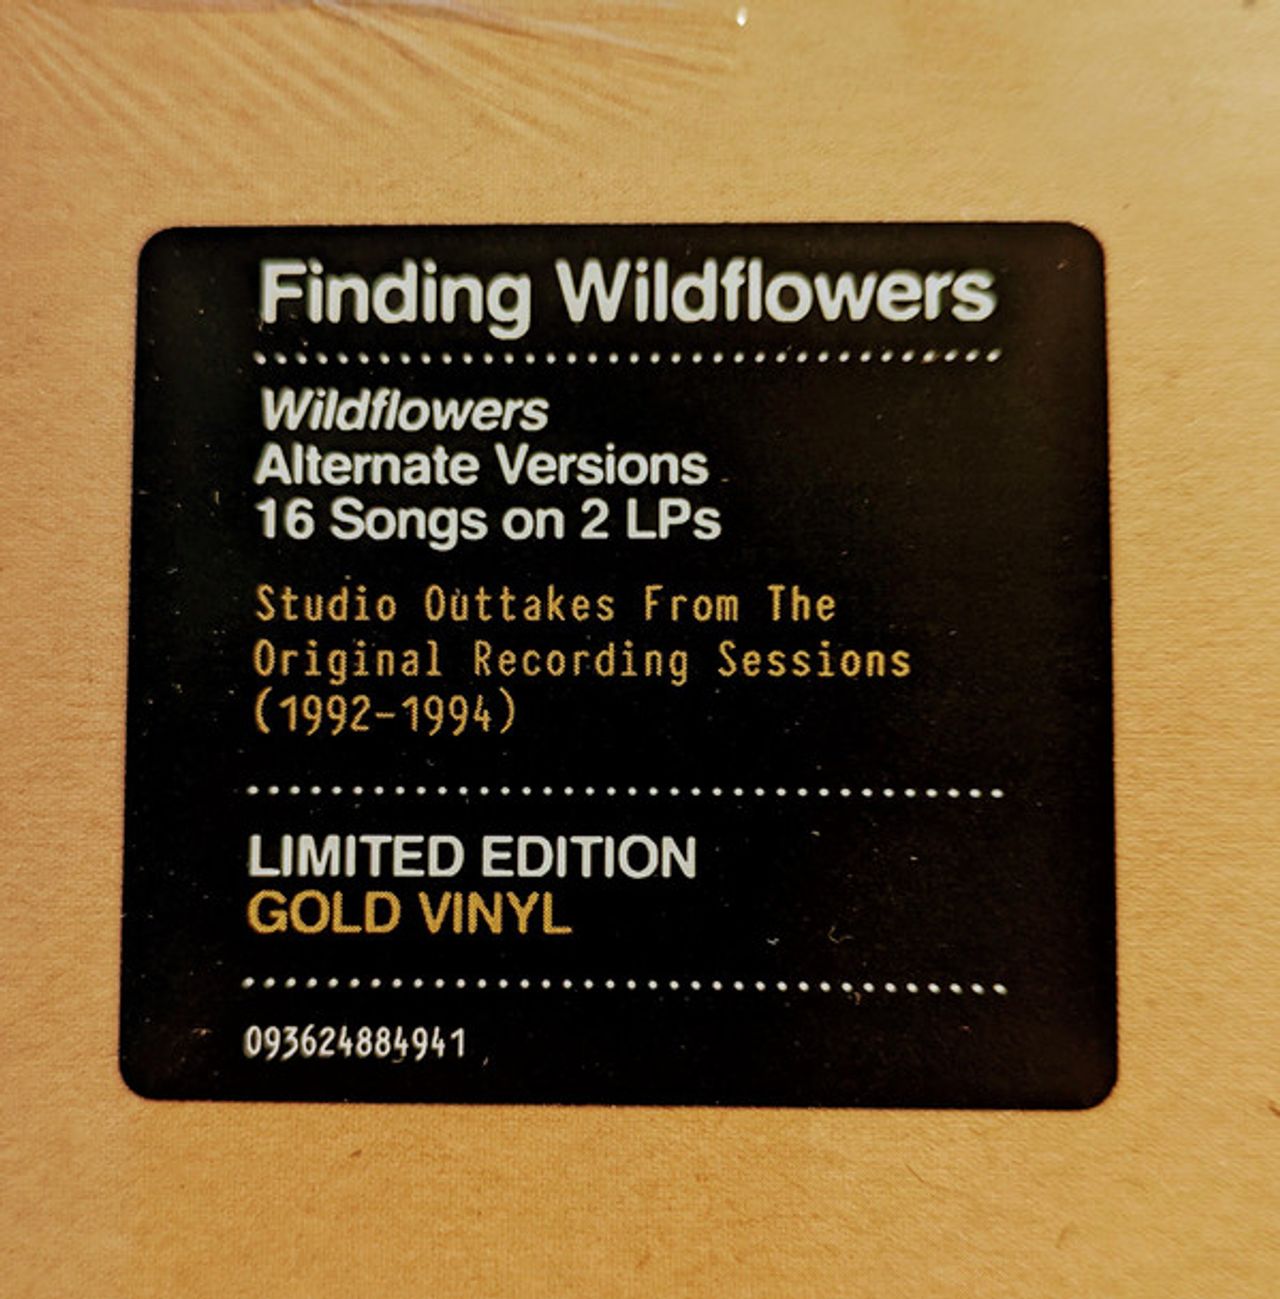 Tom Petty & The Heartbreakers Finding Wildflowers (Alternate Versions) - Gold Vinyl - Sealed UK 2-LP vinyl record set (Double LP Album) 093624884941